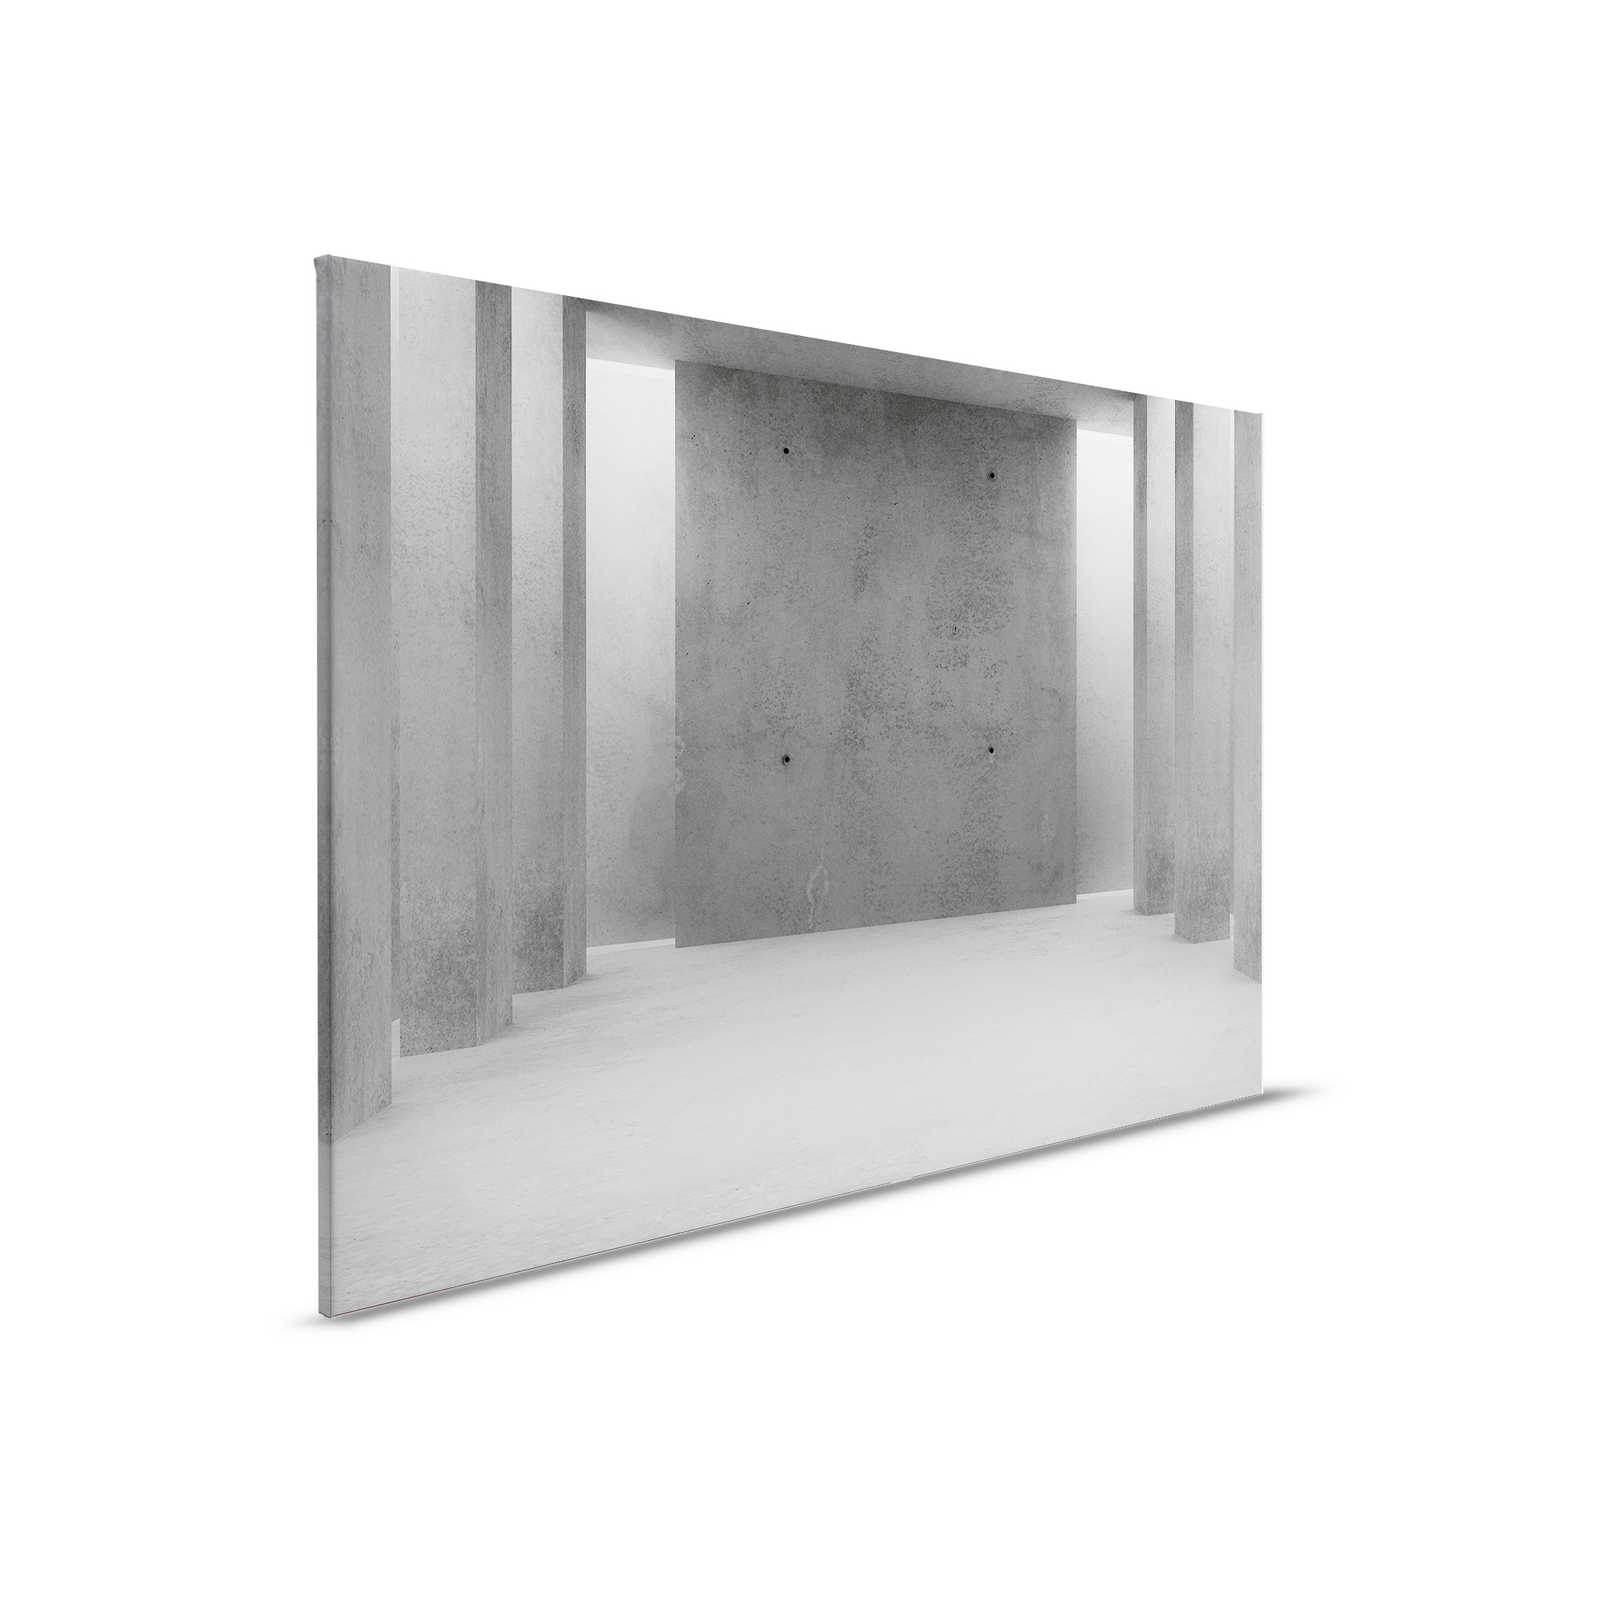         Leinwandbild mit einem 3D Beton Raum | grau – 0,90 m x 0,60 m
    